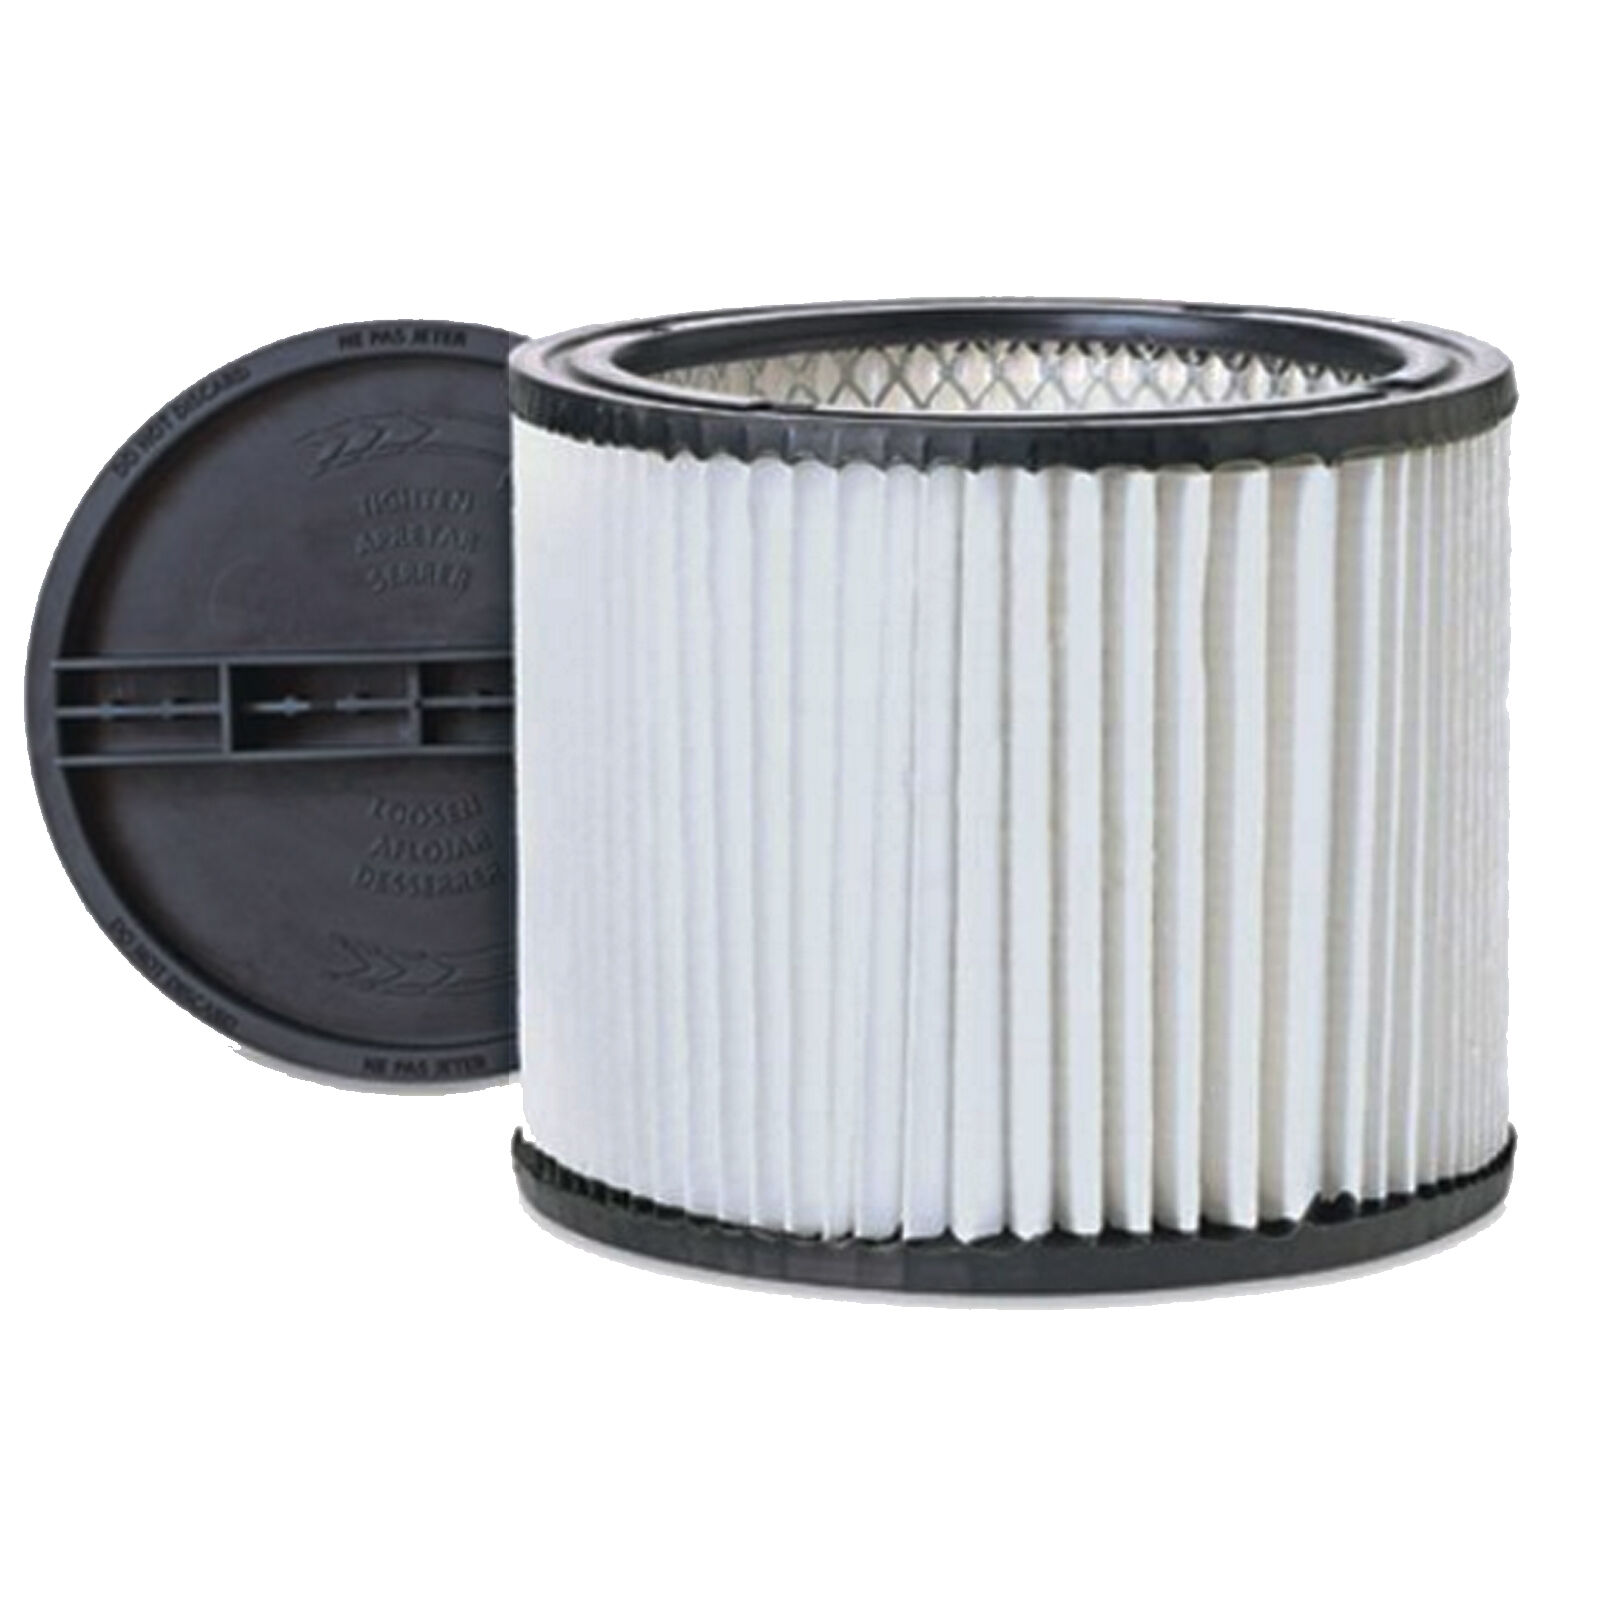 Vacuum Cleaner Cartridge Filter For Shop-vac 90304 & Retaining Lid 4518600